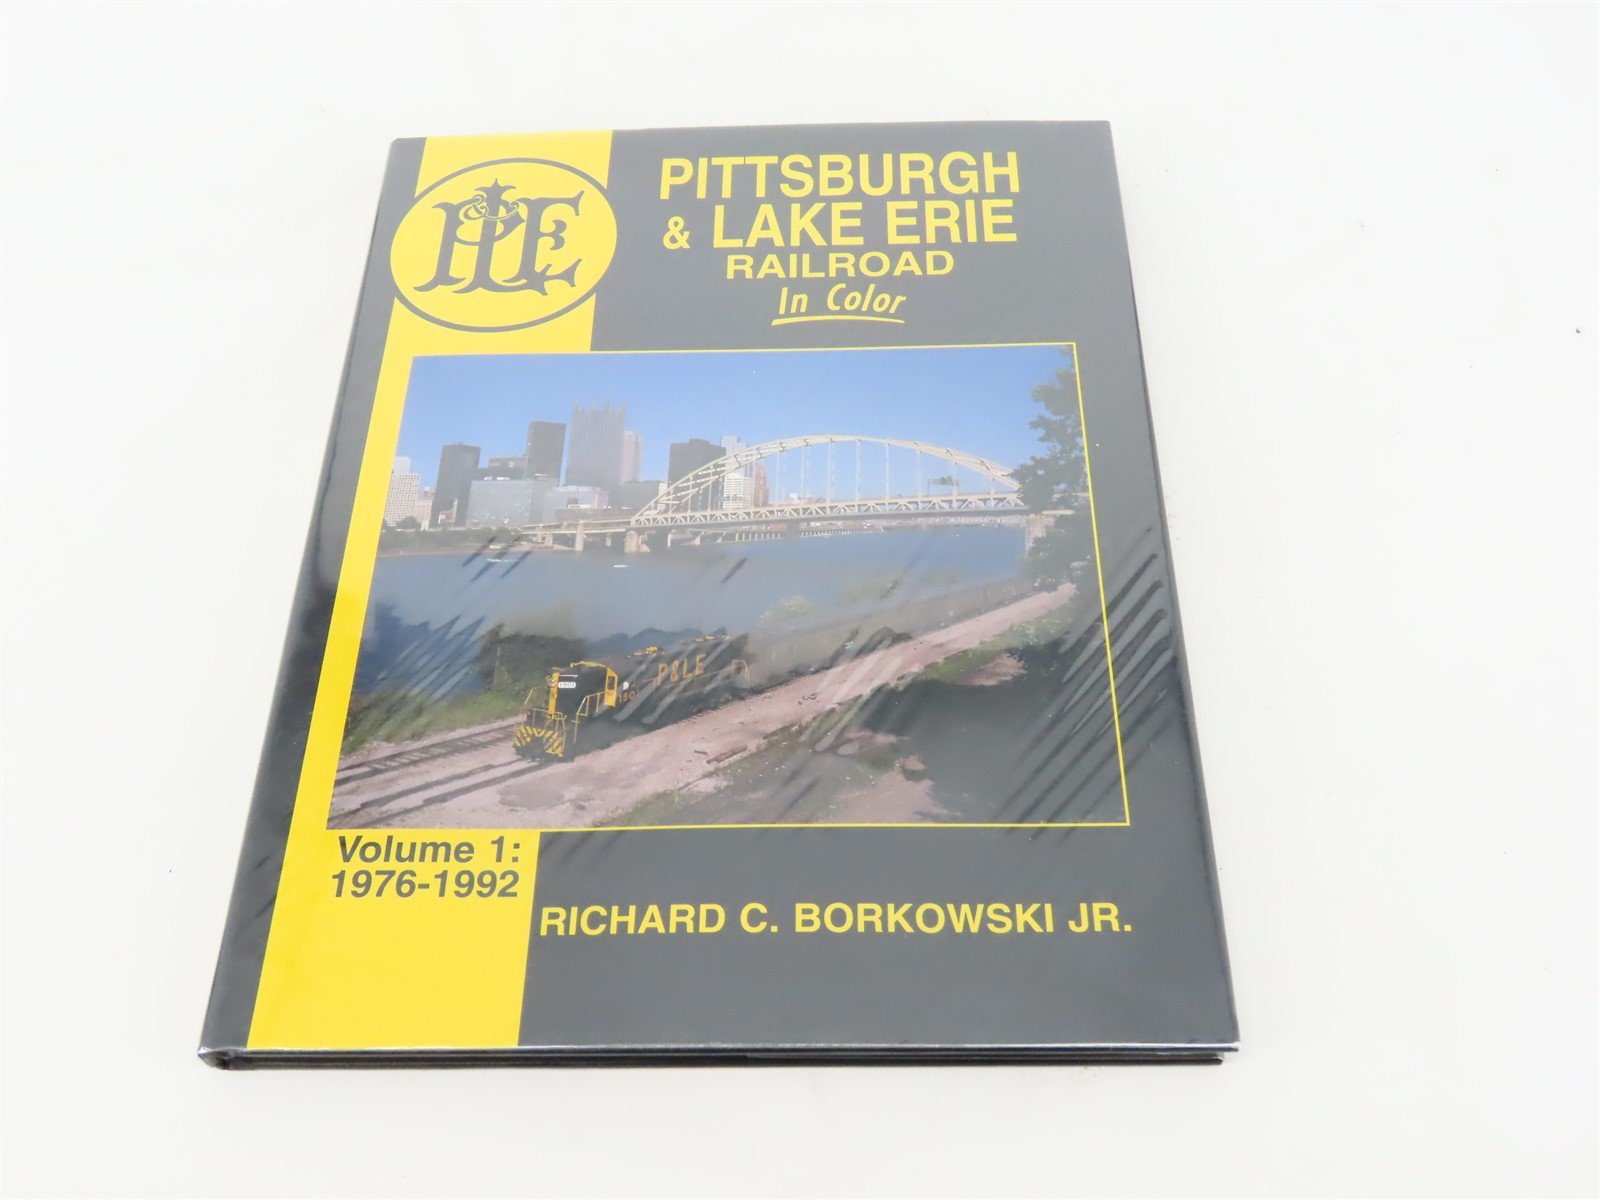 Morning Sun: Pittsburgh & Lake Erie Vol 1: 1976-1992 by R.C. Borkowski, Jr ©2002